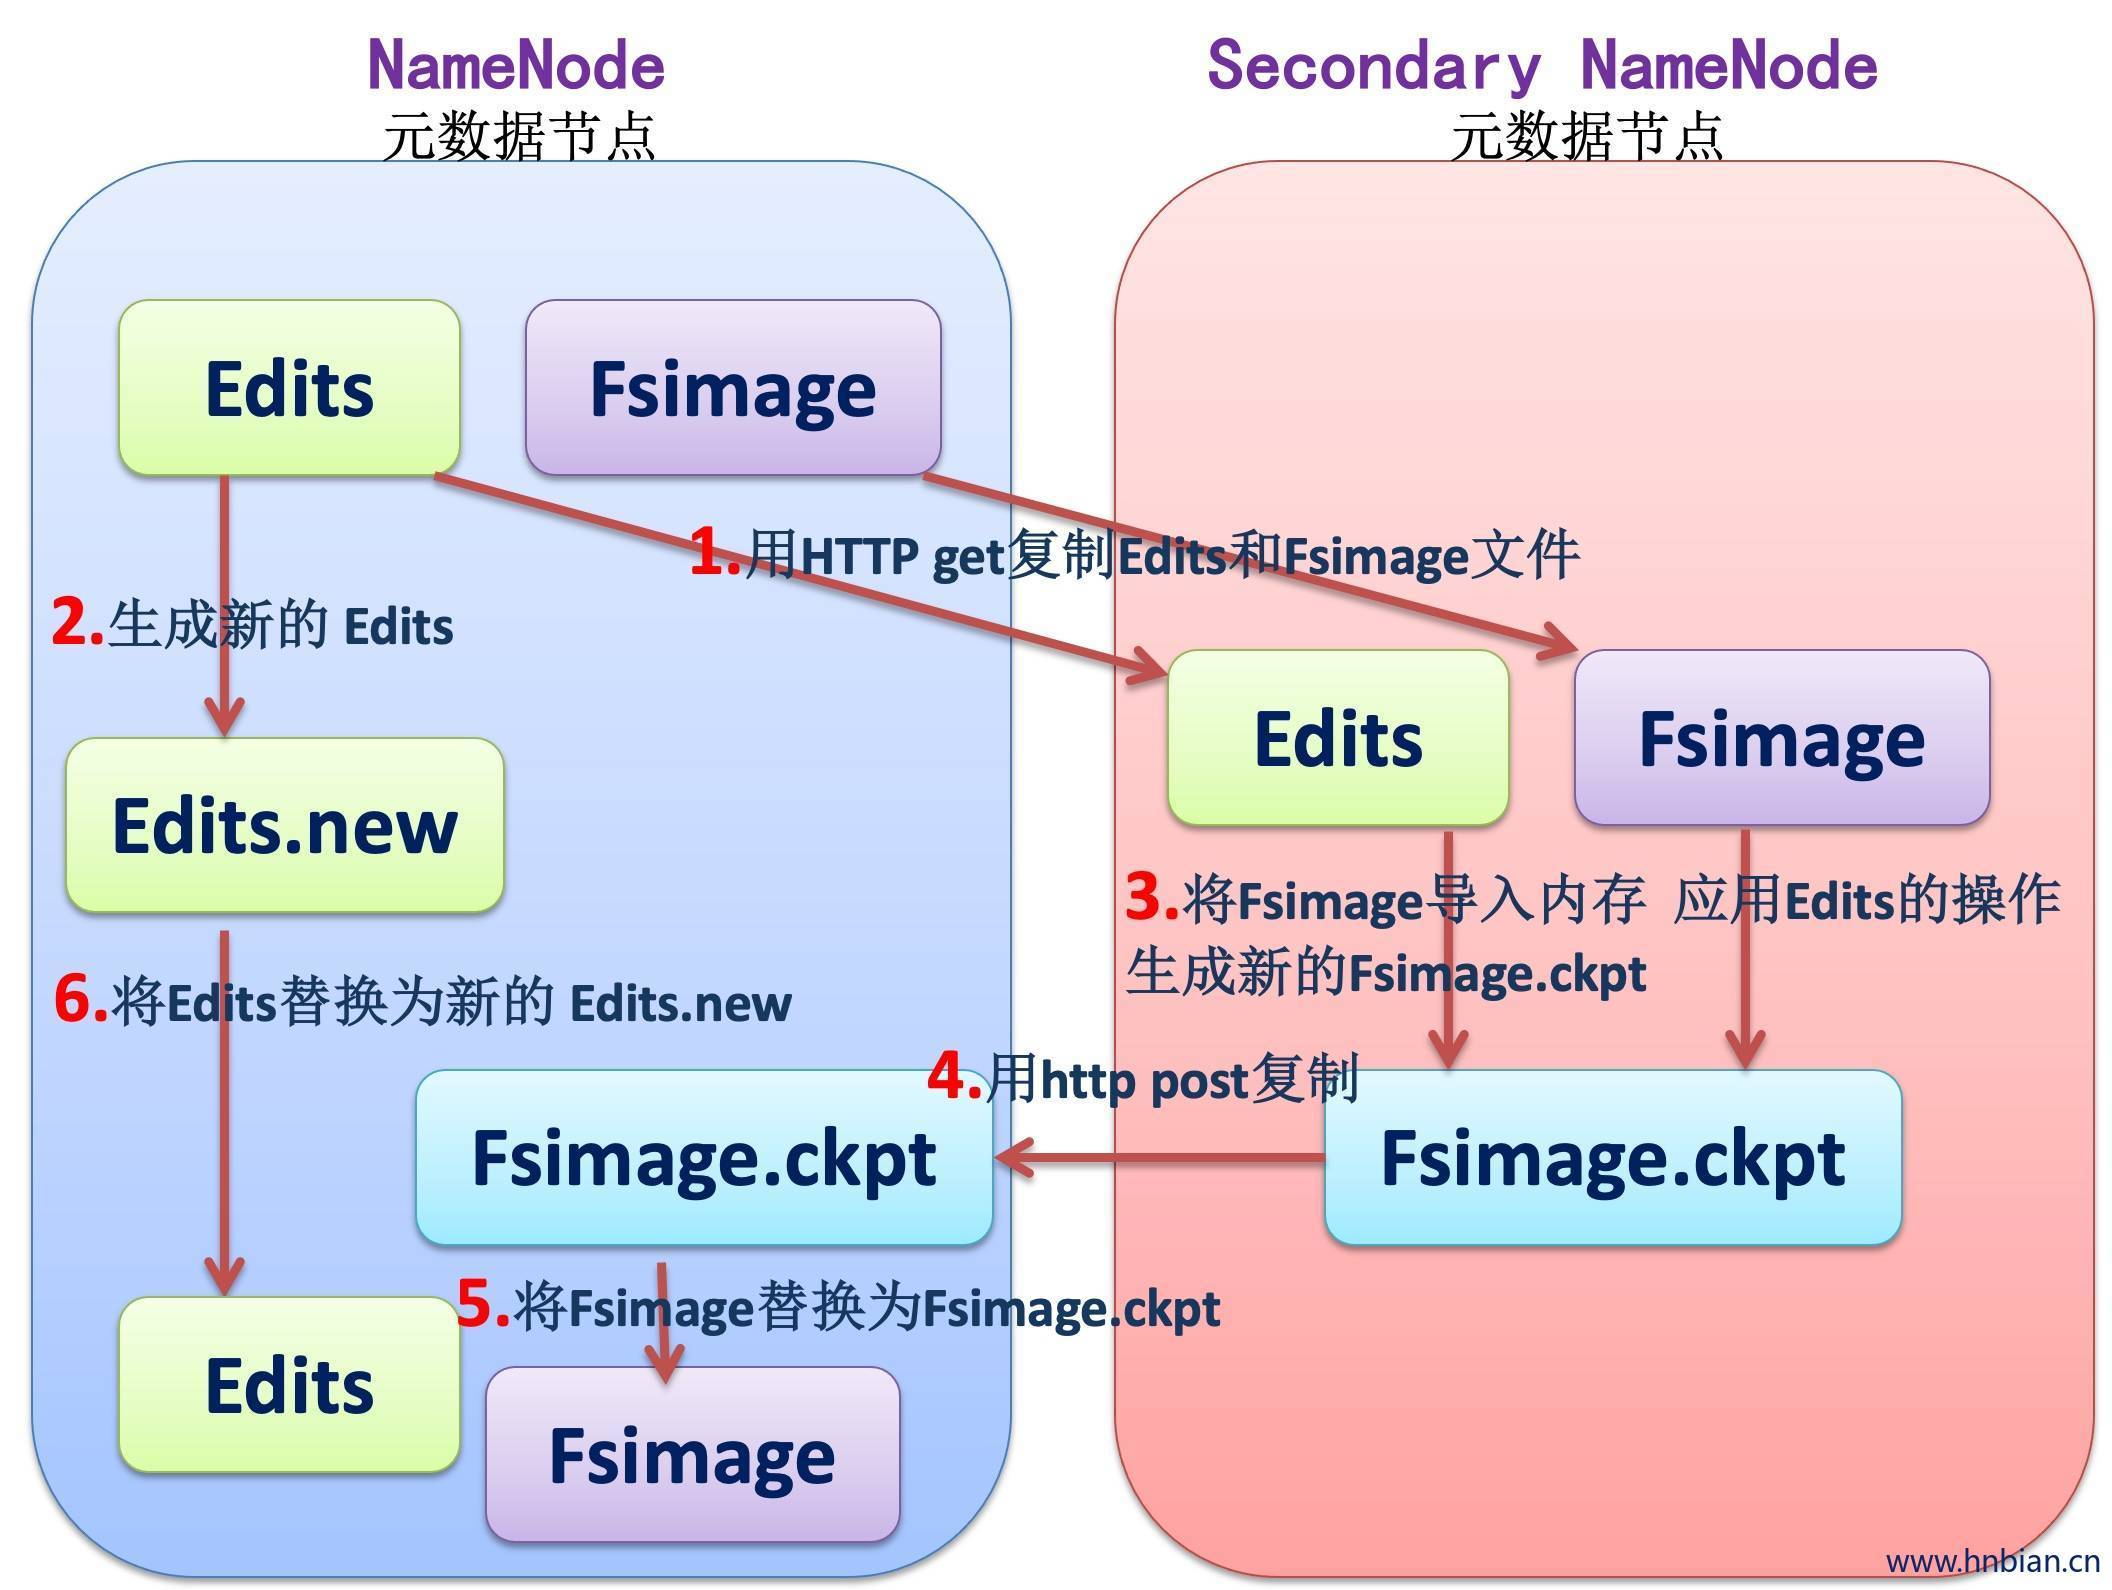 Secondary NameNode 的工作流程